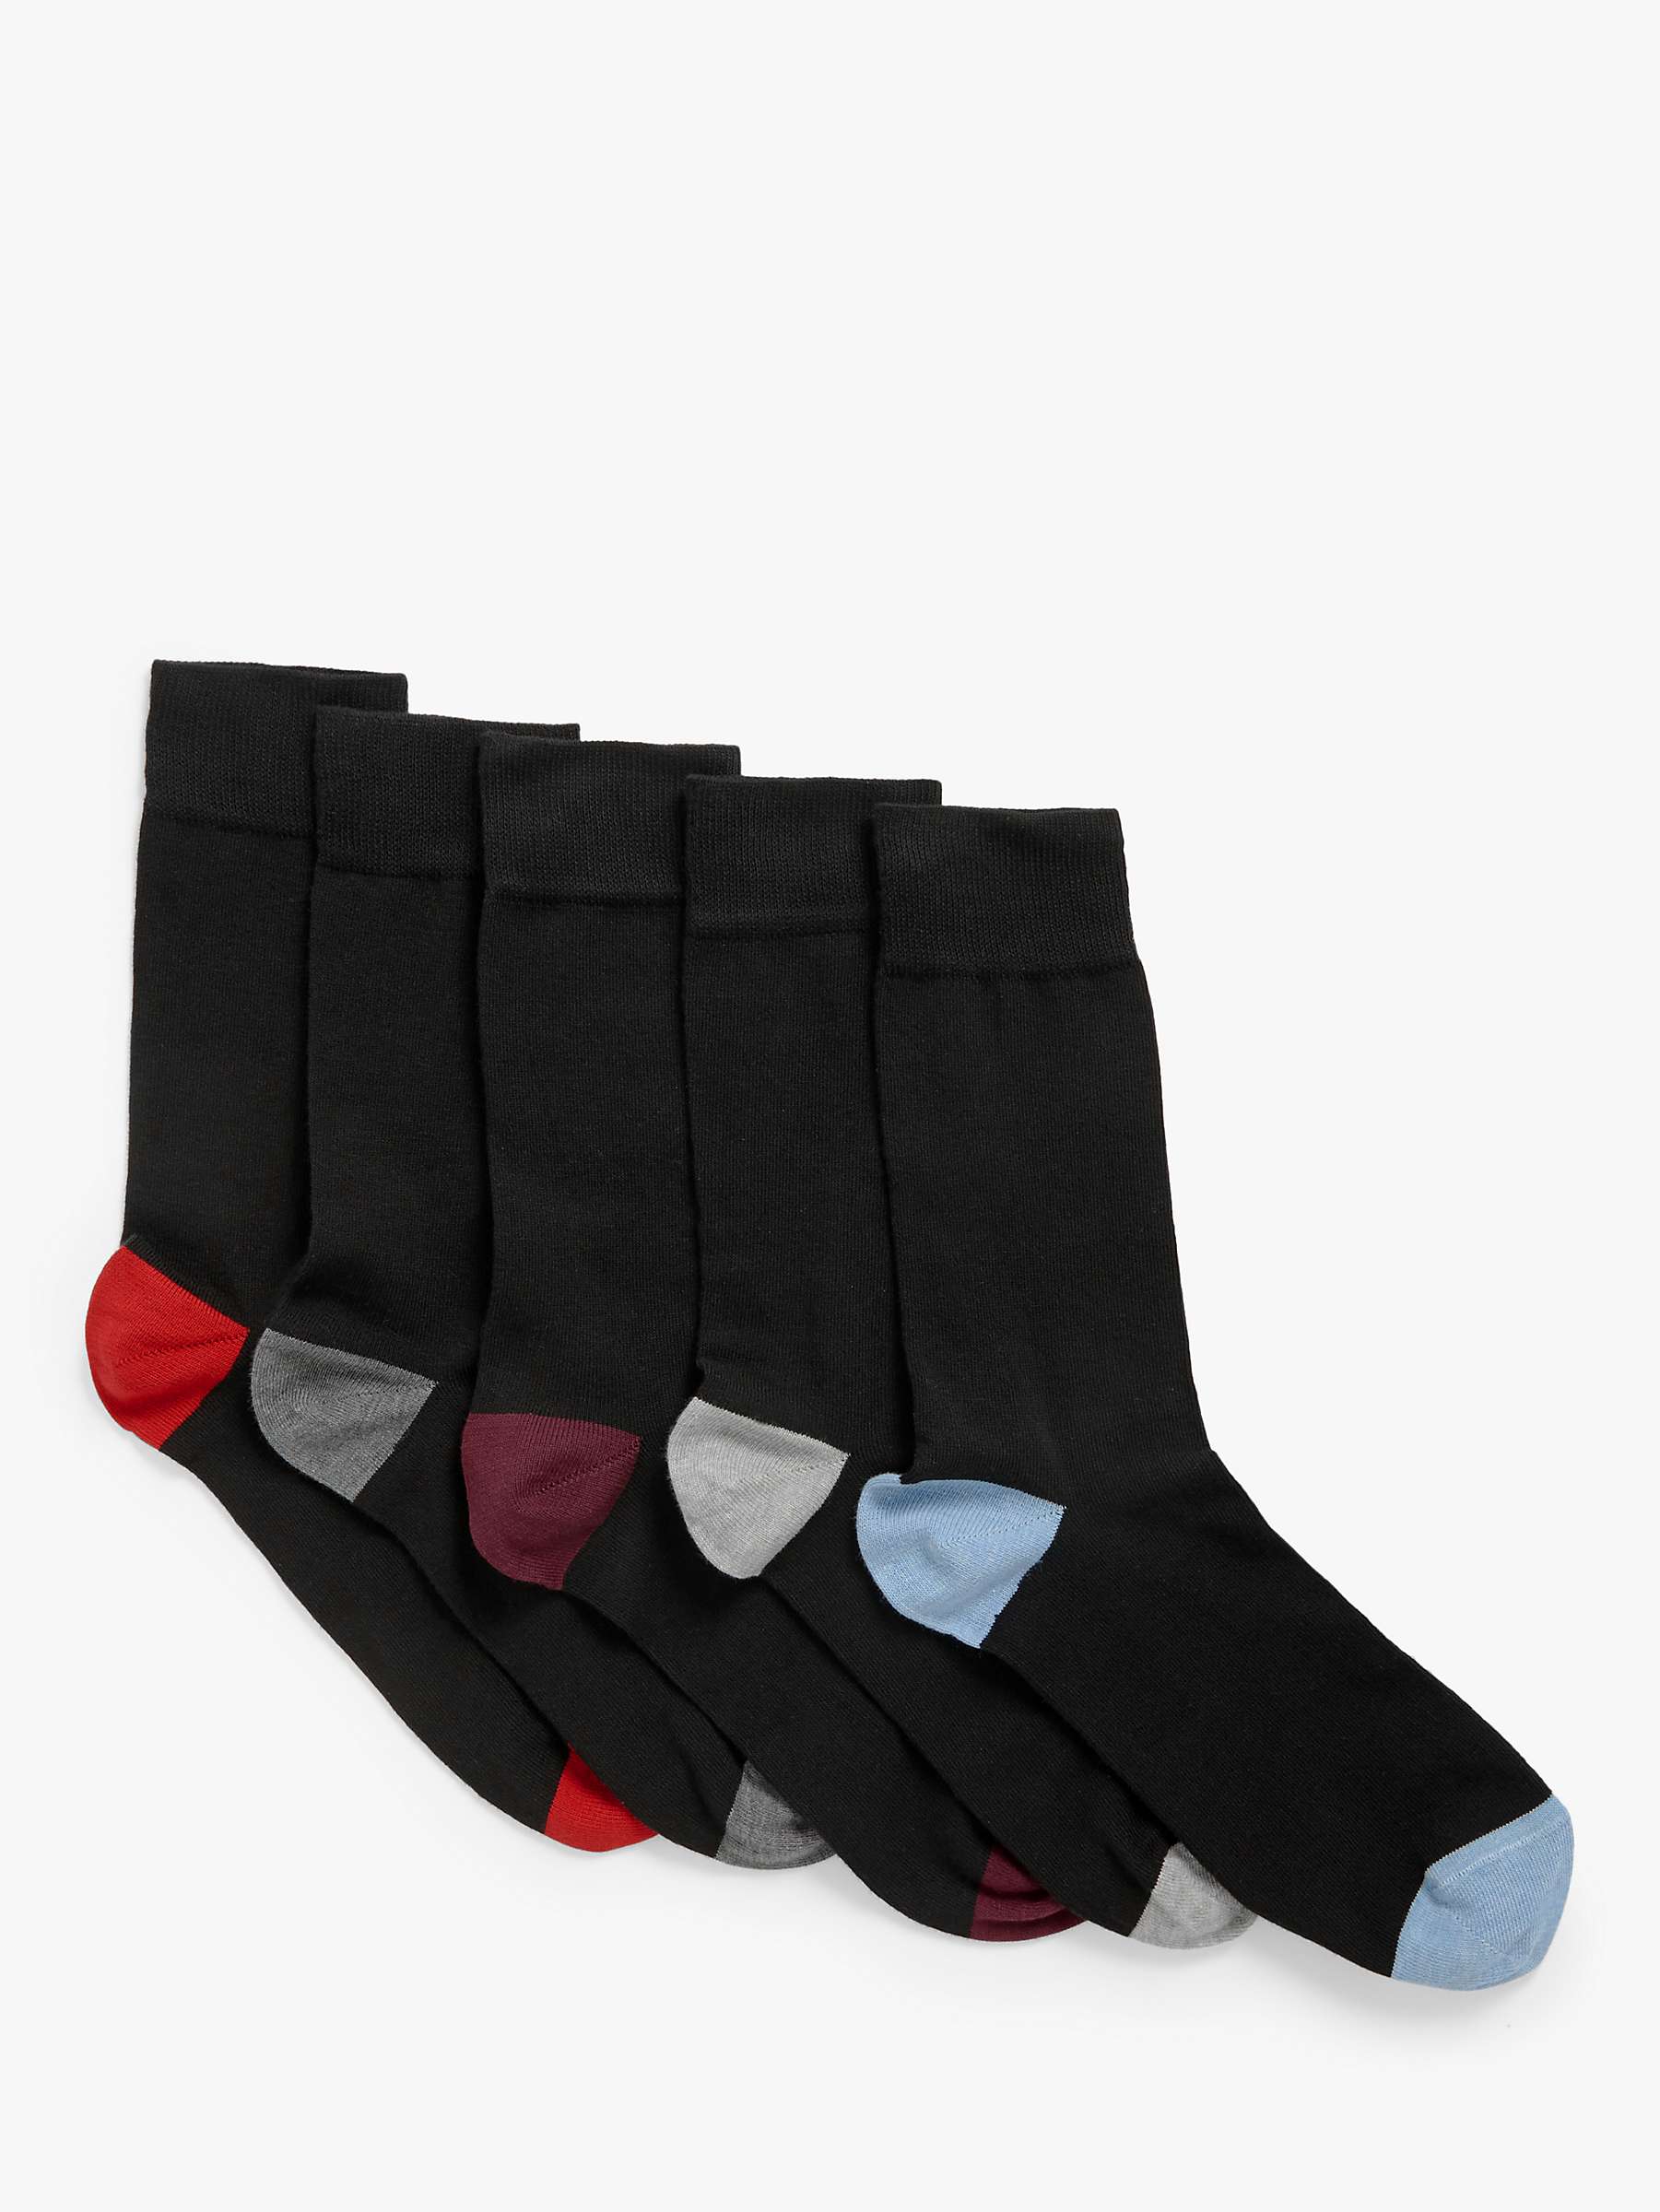 John Lewis Organic Cotton Rich Heel and Toe Men\'s Socks, Pack of 5, Black  at John Lewis & Partners